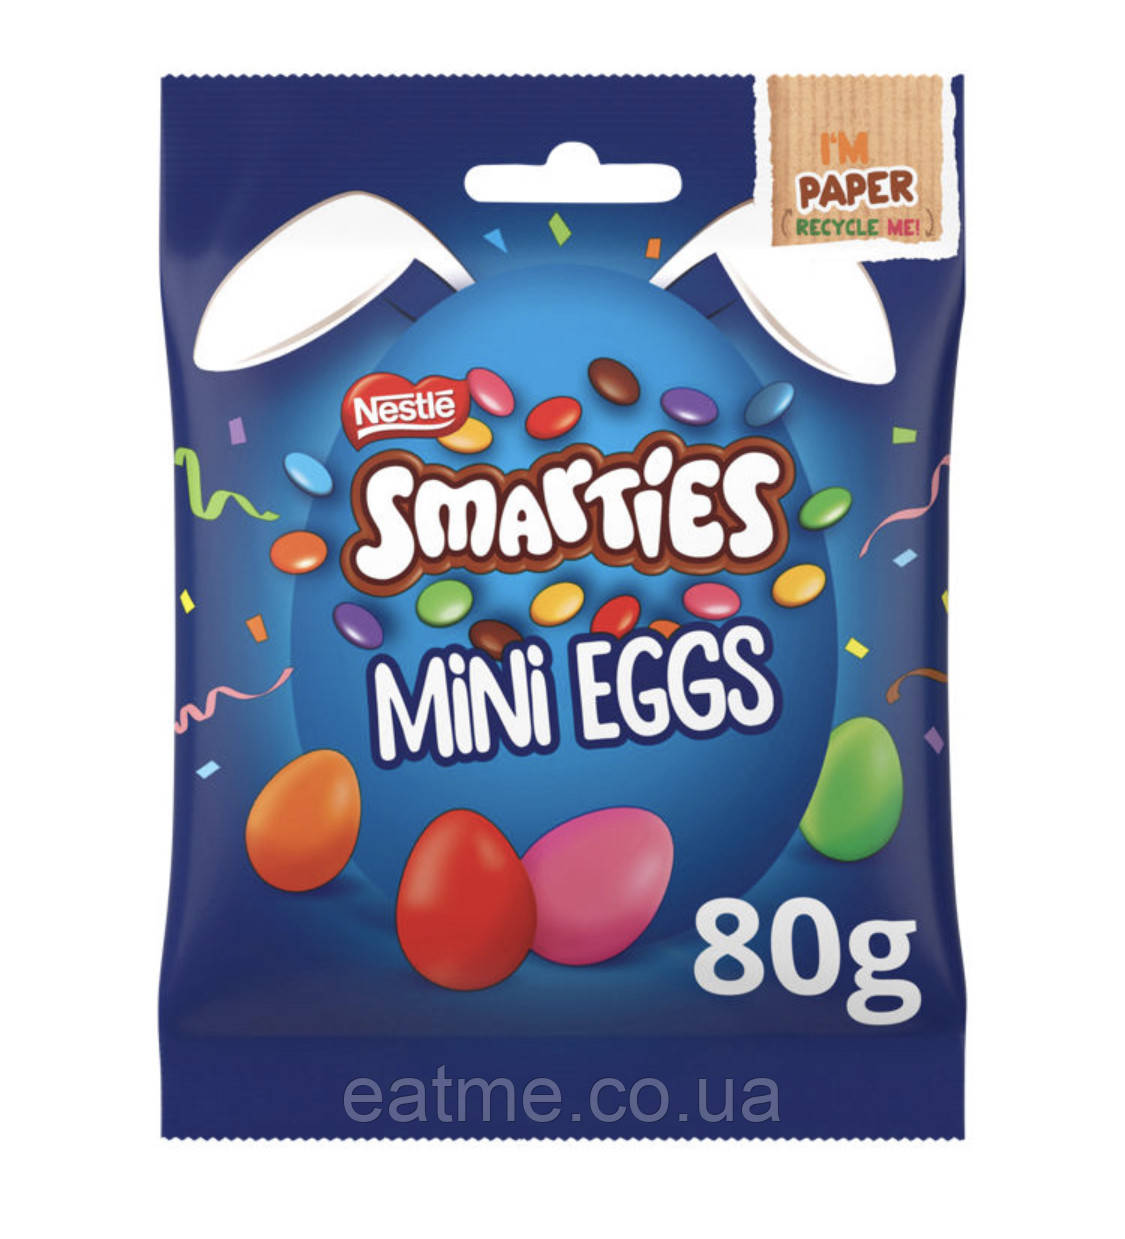 Smarties mini eggs 80g